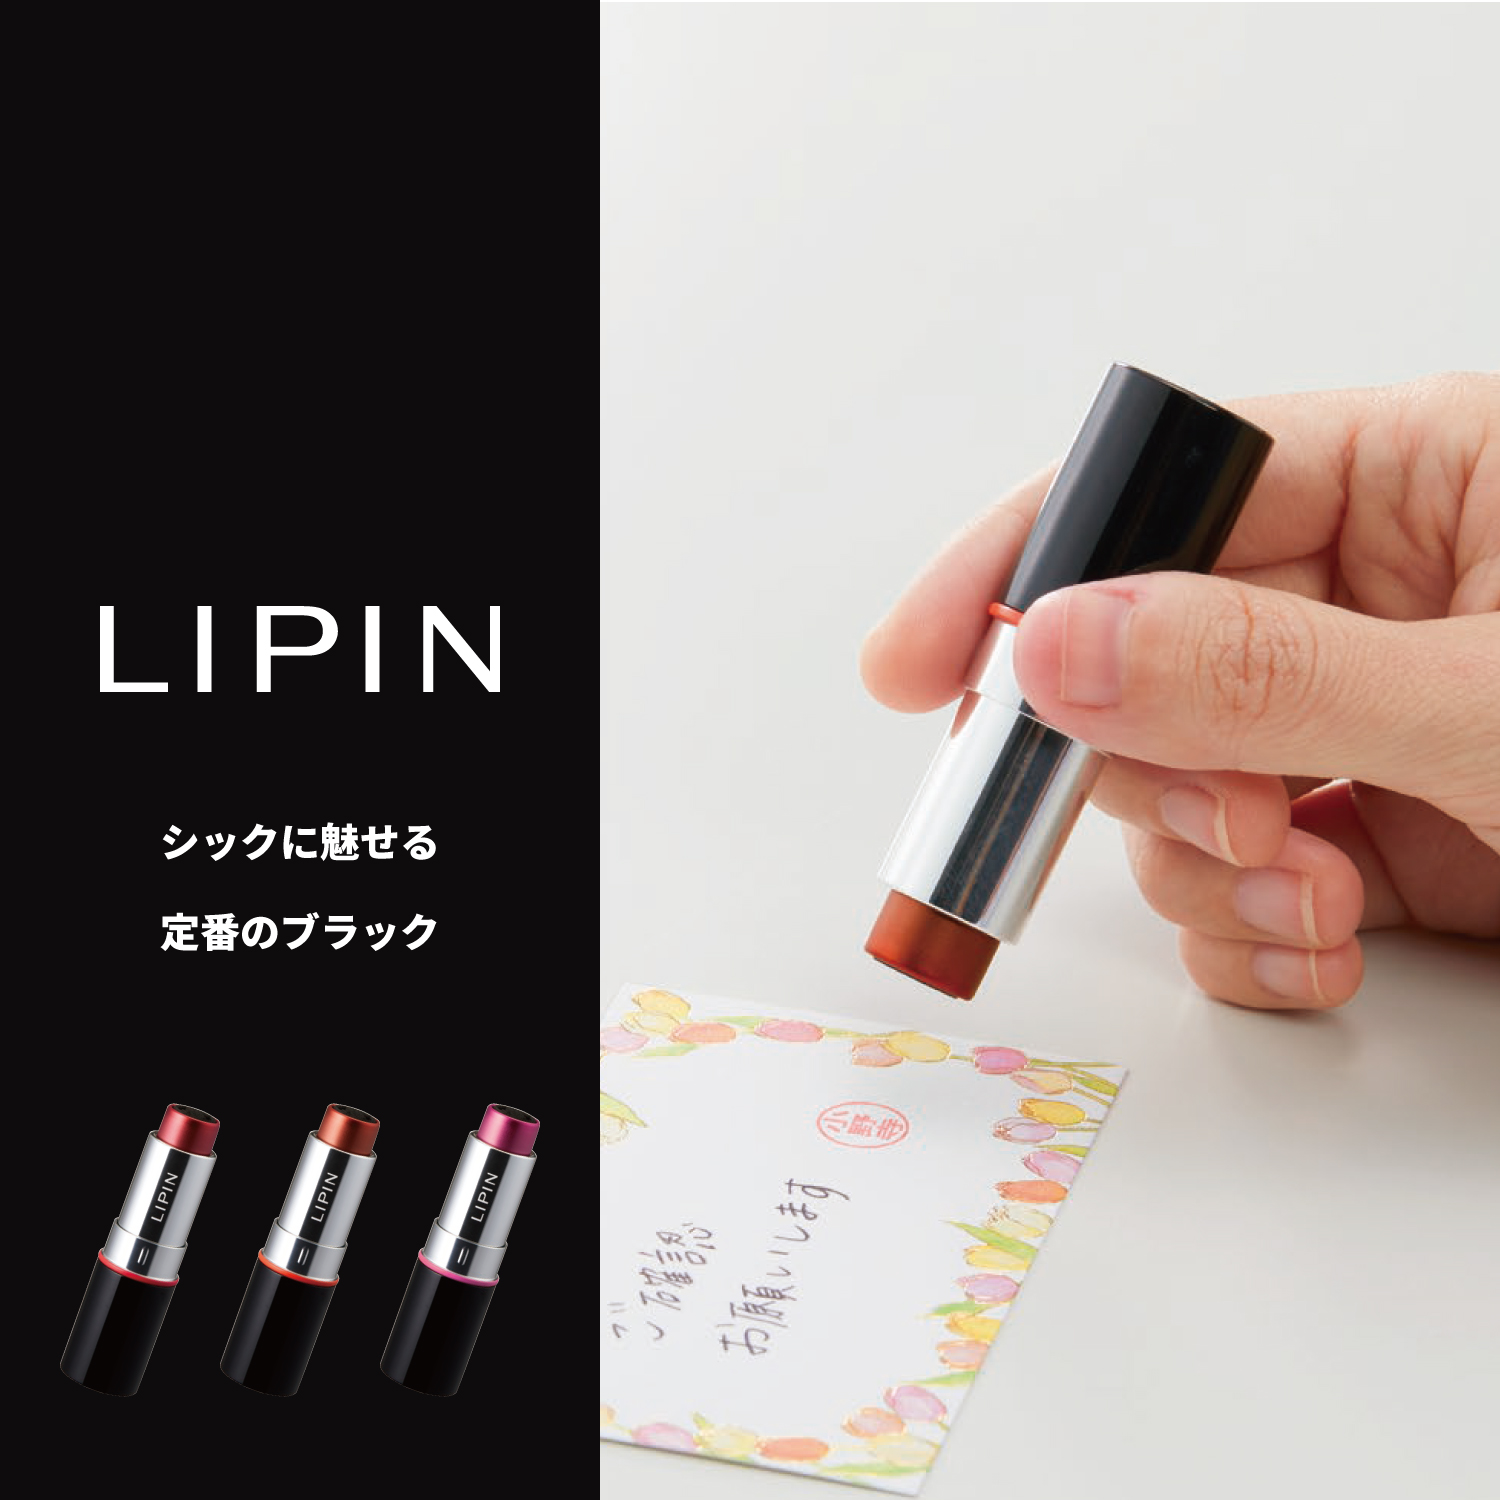 LIPIN+専用補充インキセット【本体色:ピンクゴールド/インキ色:プラムピンク】_6